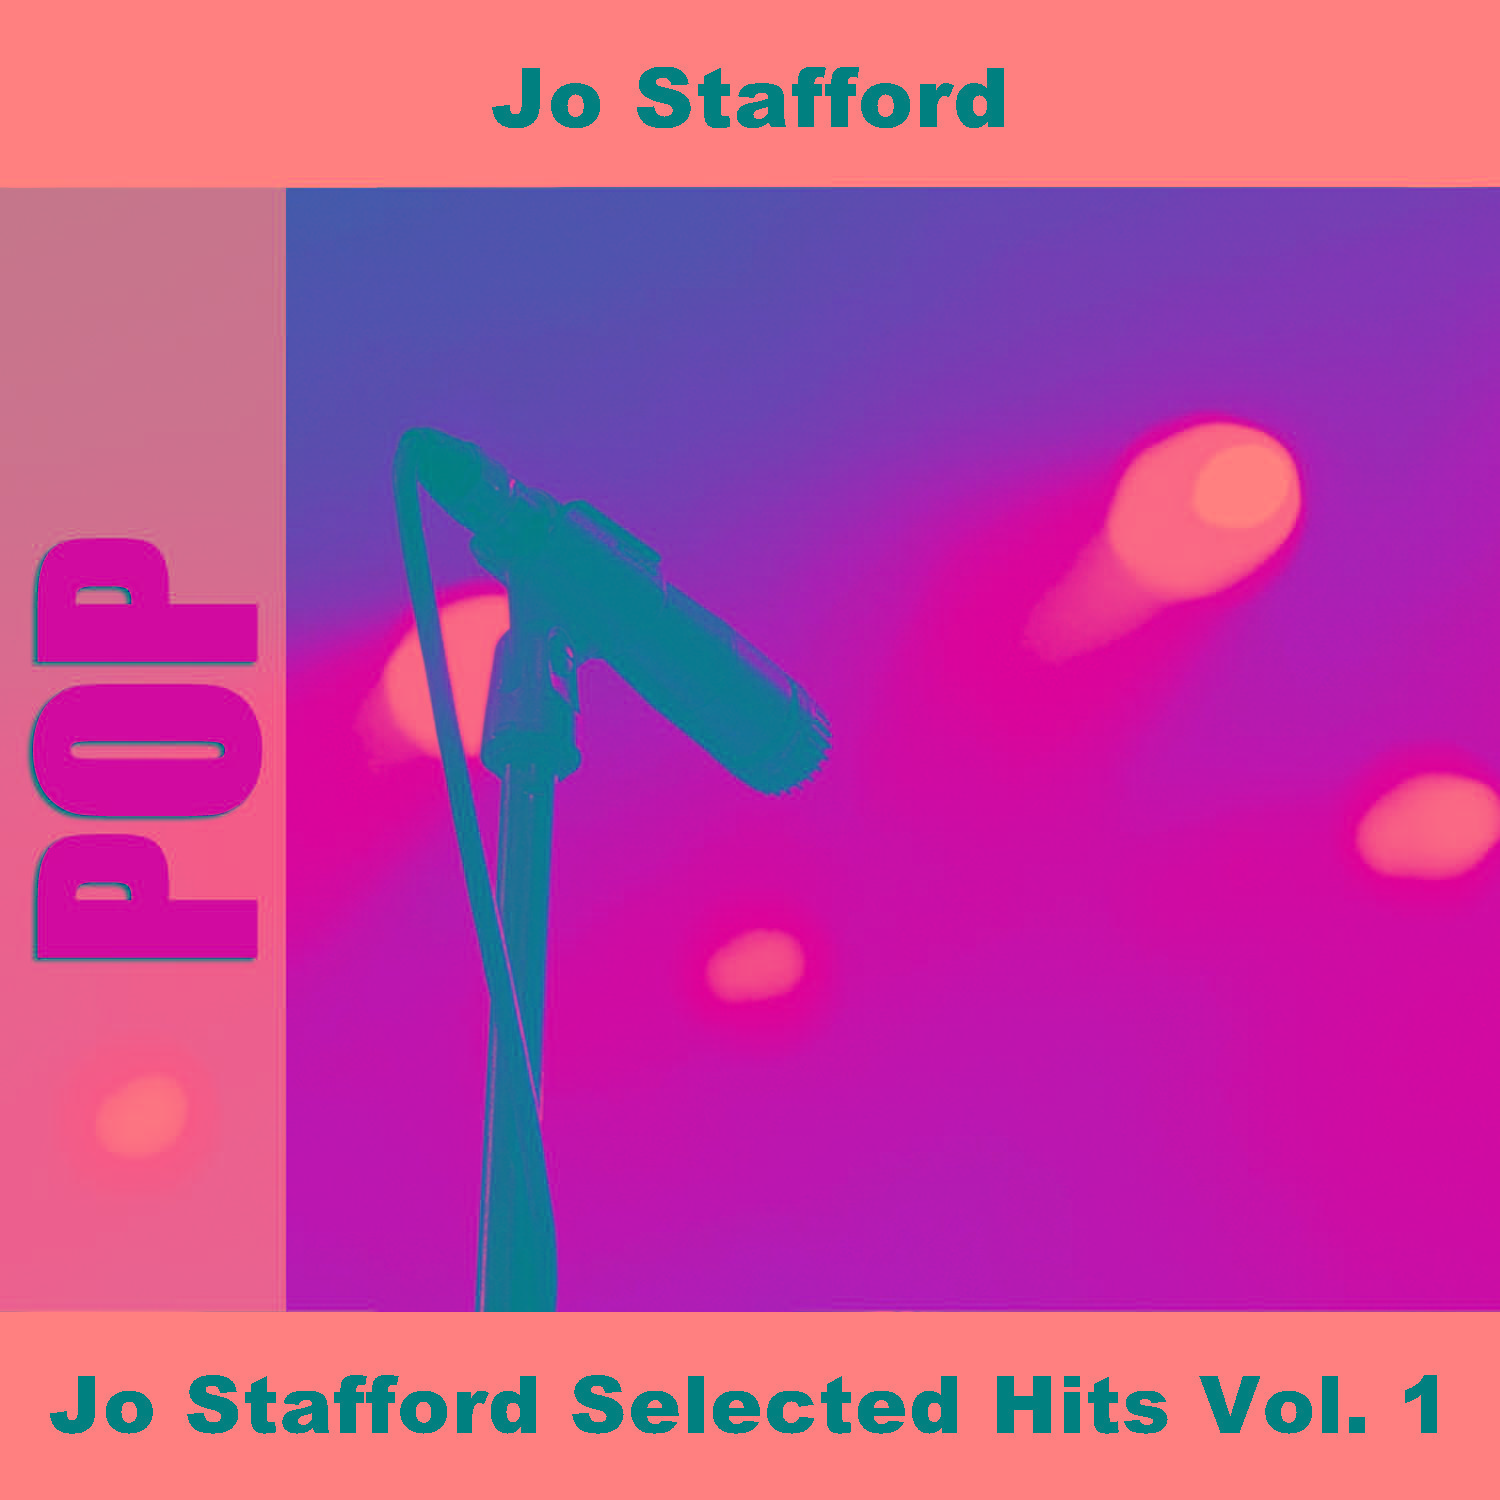 Jo Stafford Selected Hits Vol. 1